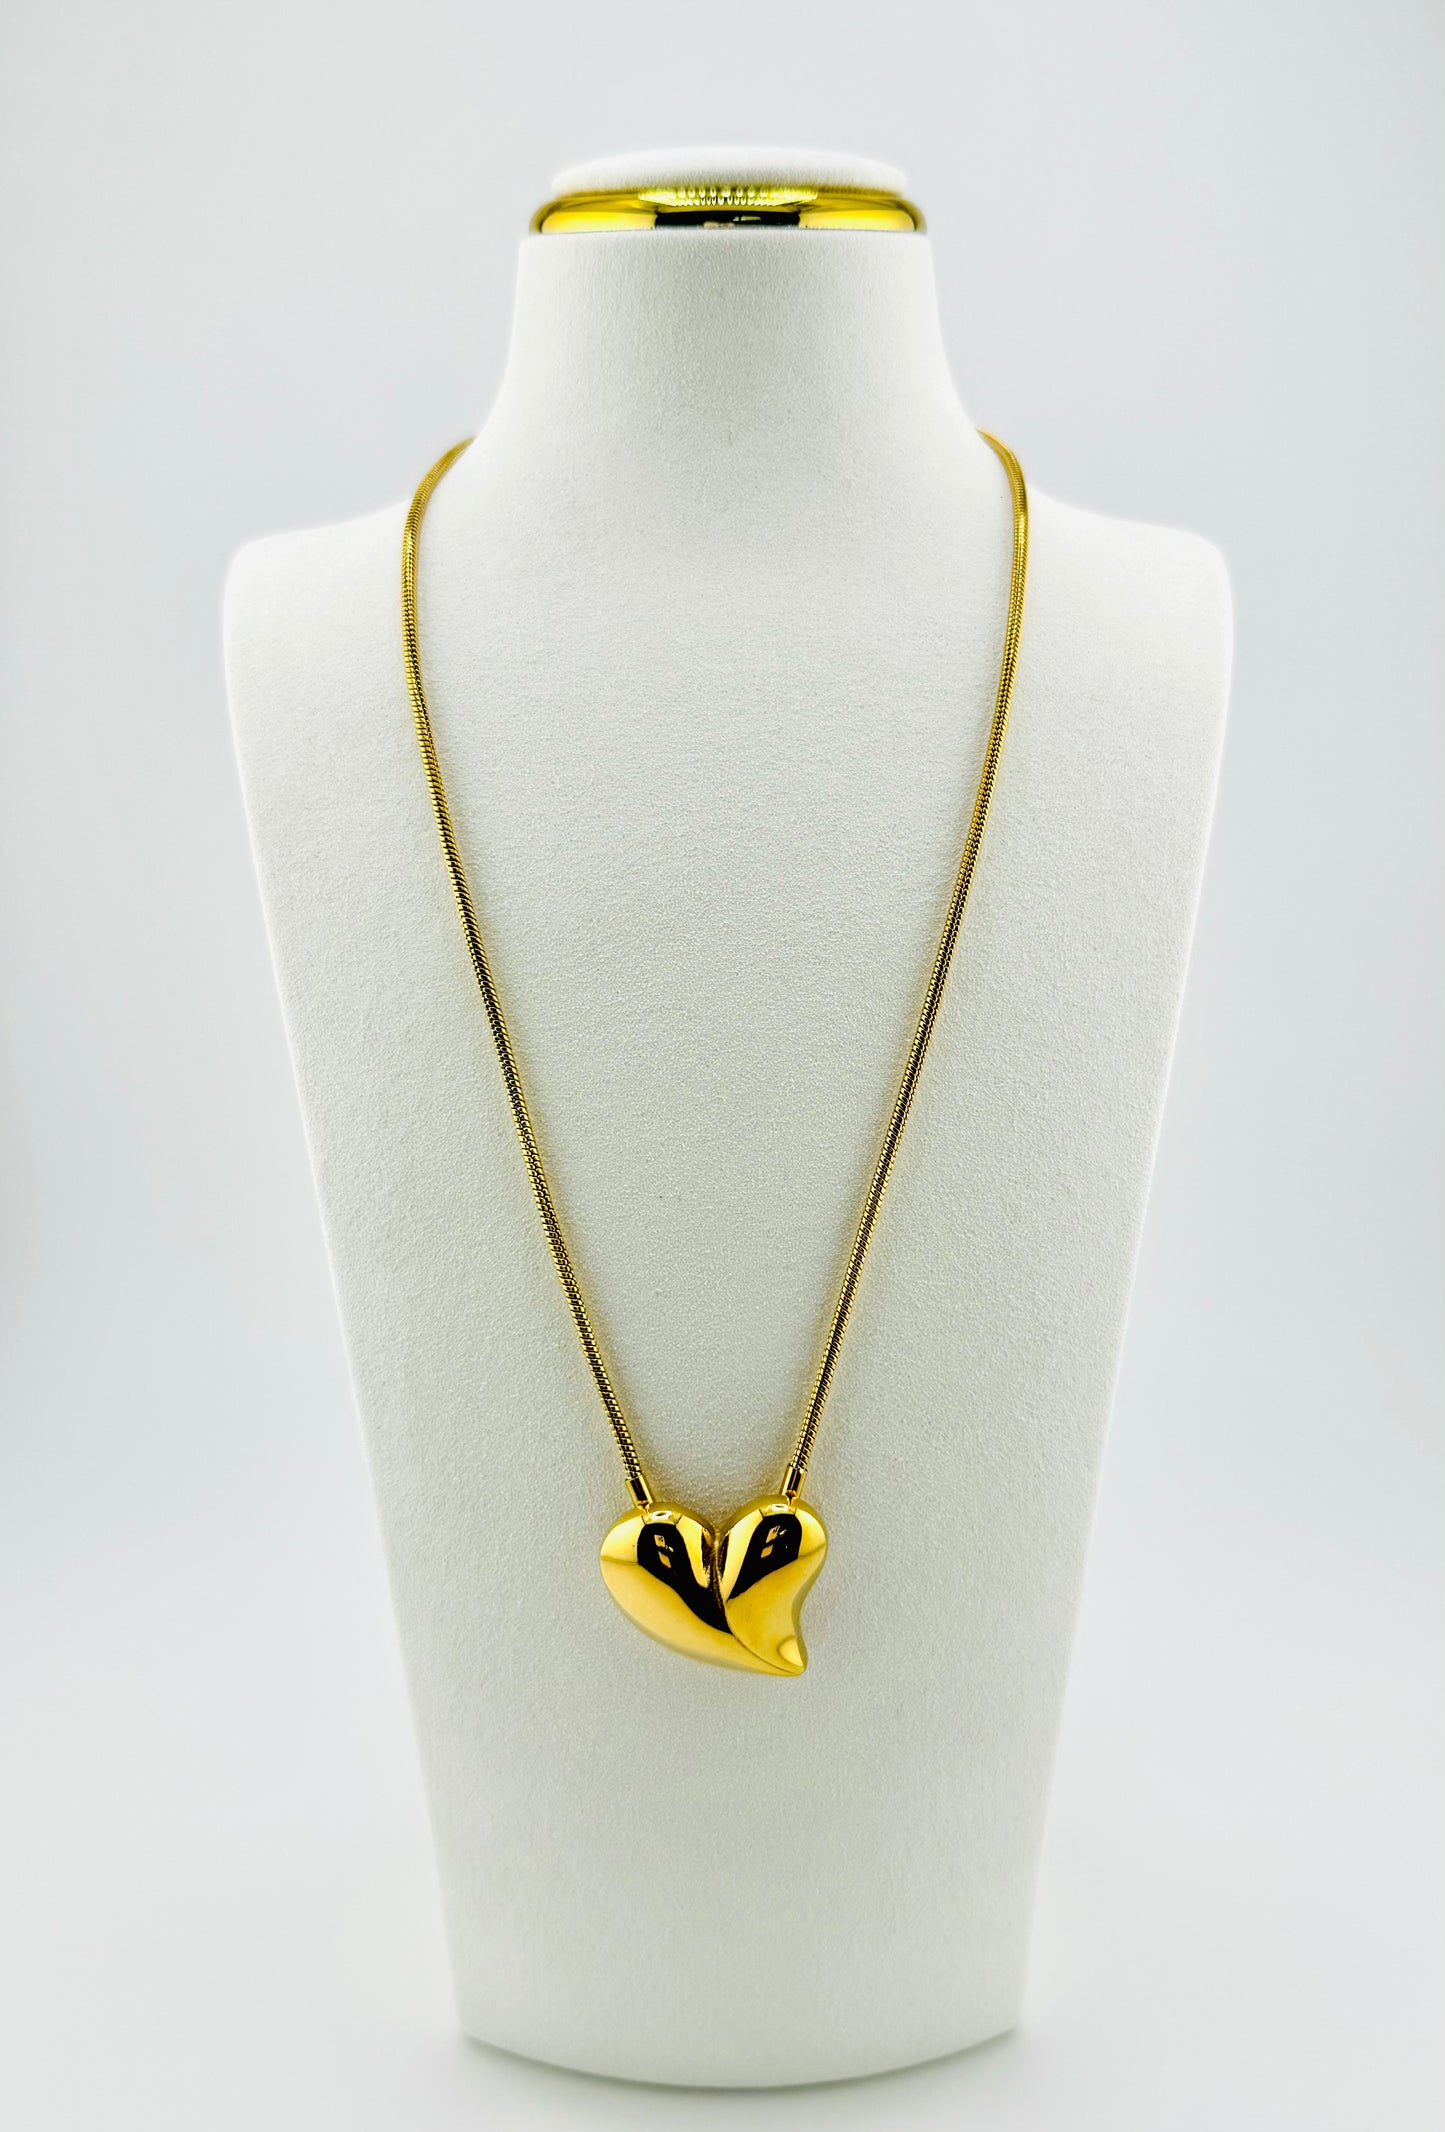 Eleanor stainless steel heart shape necklace